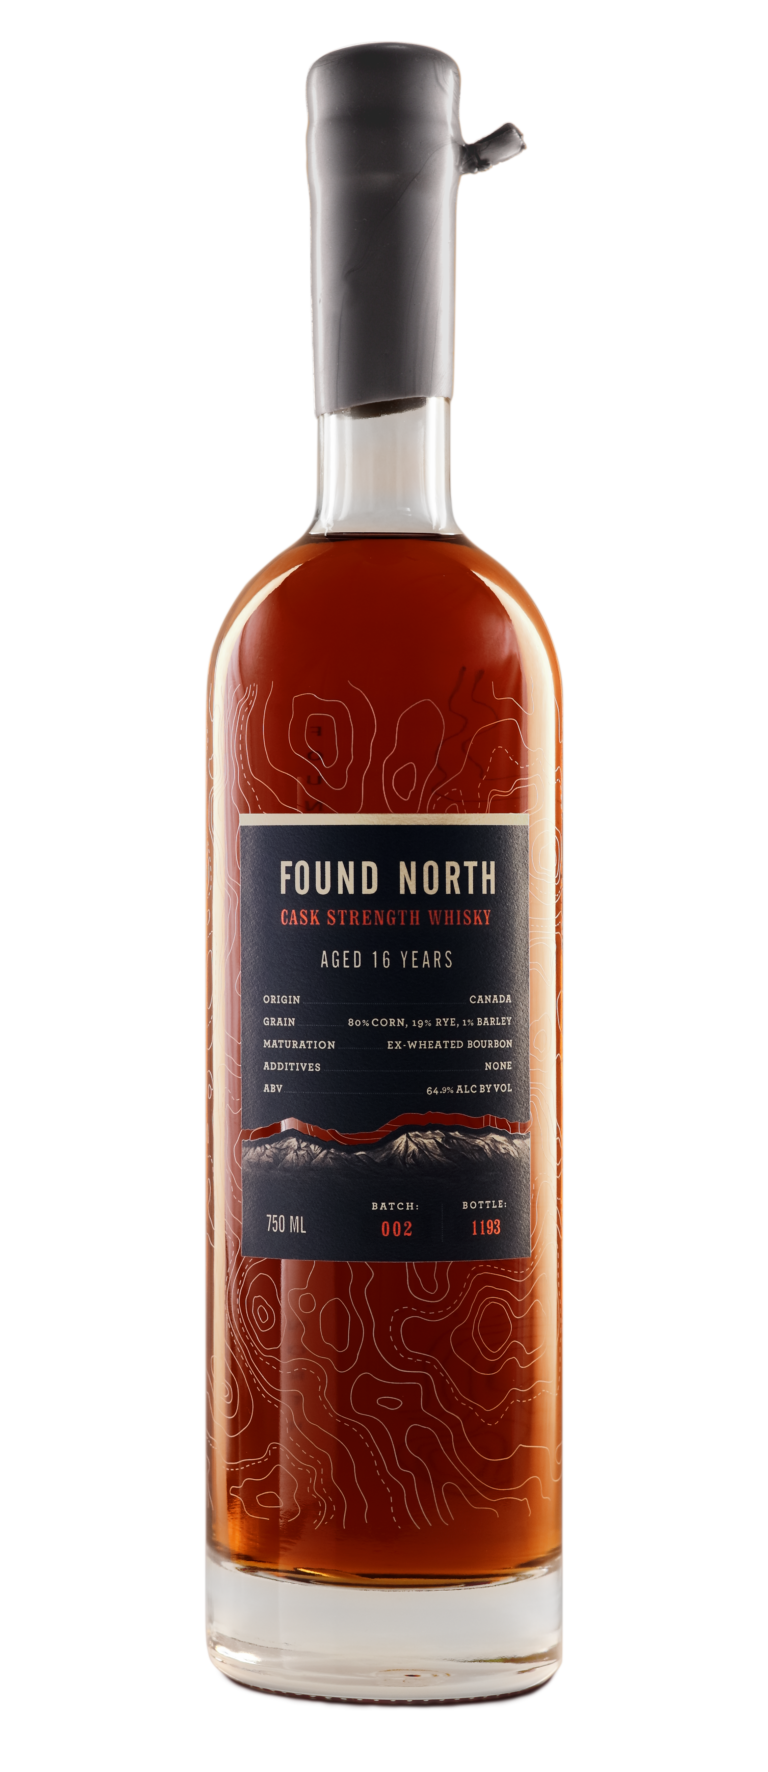 Found North Cask Strength Whisky Batch 002